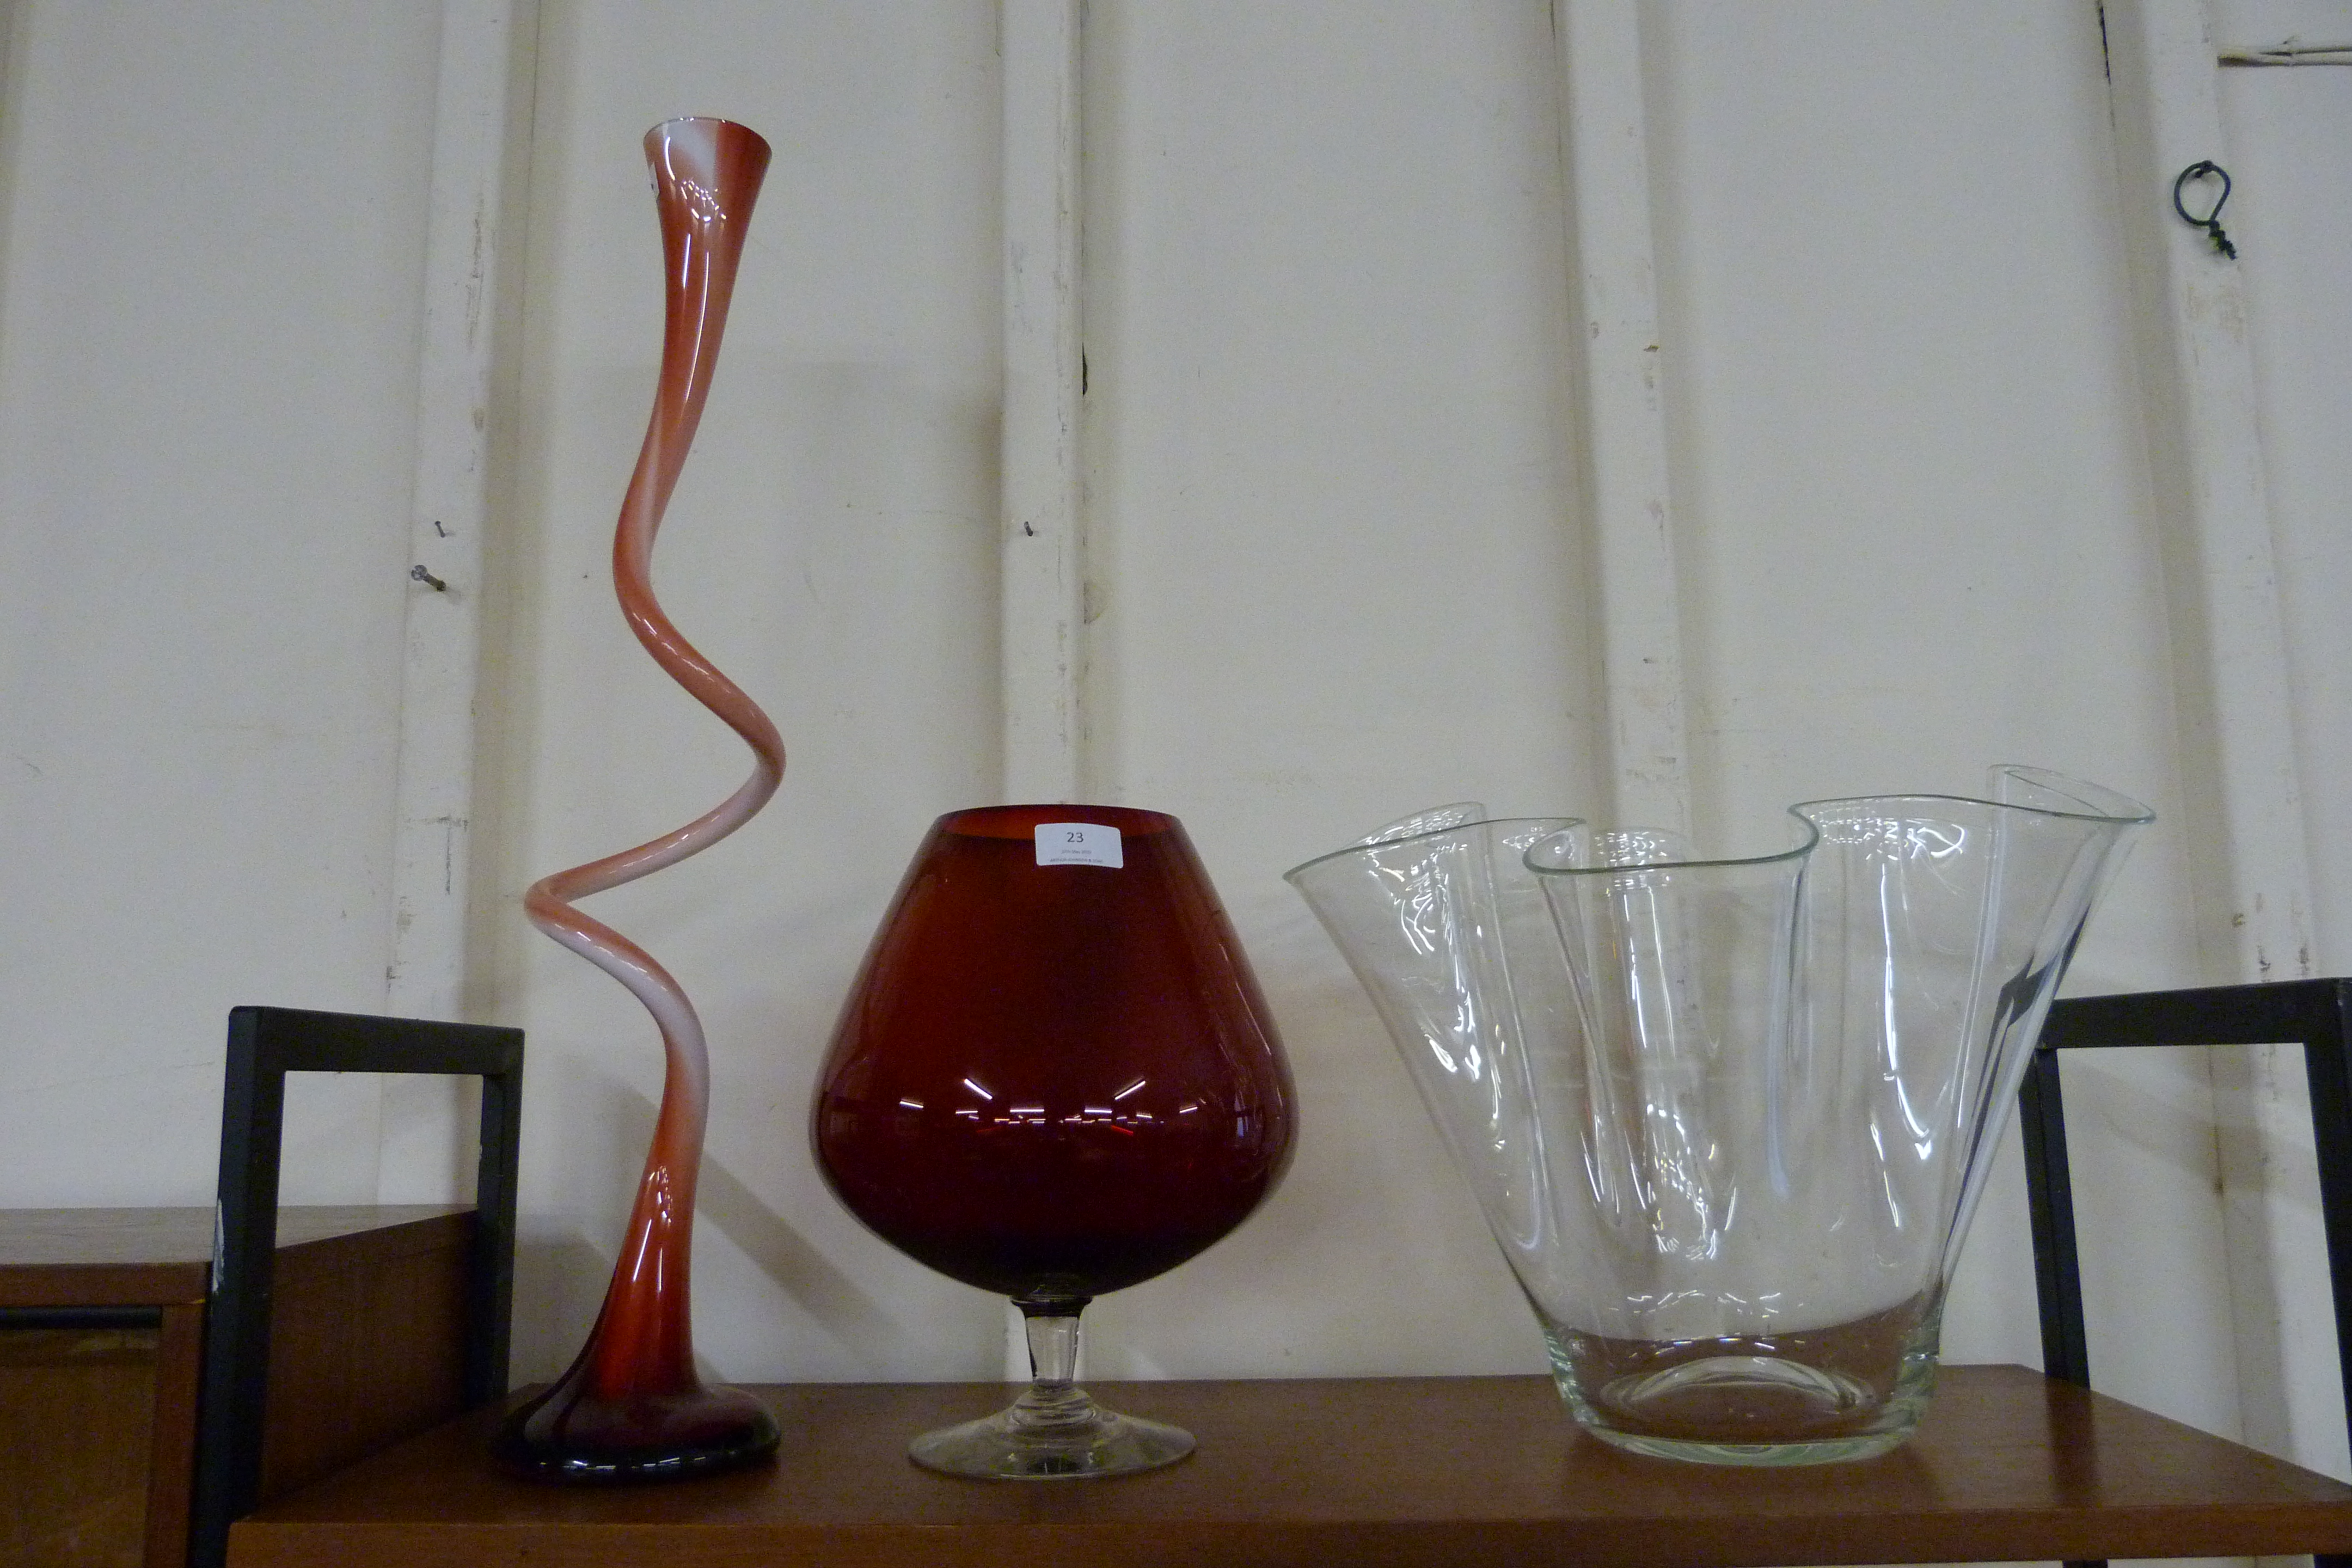 Three pieces of studio glassware